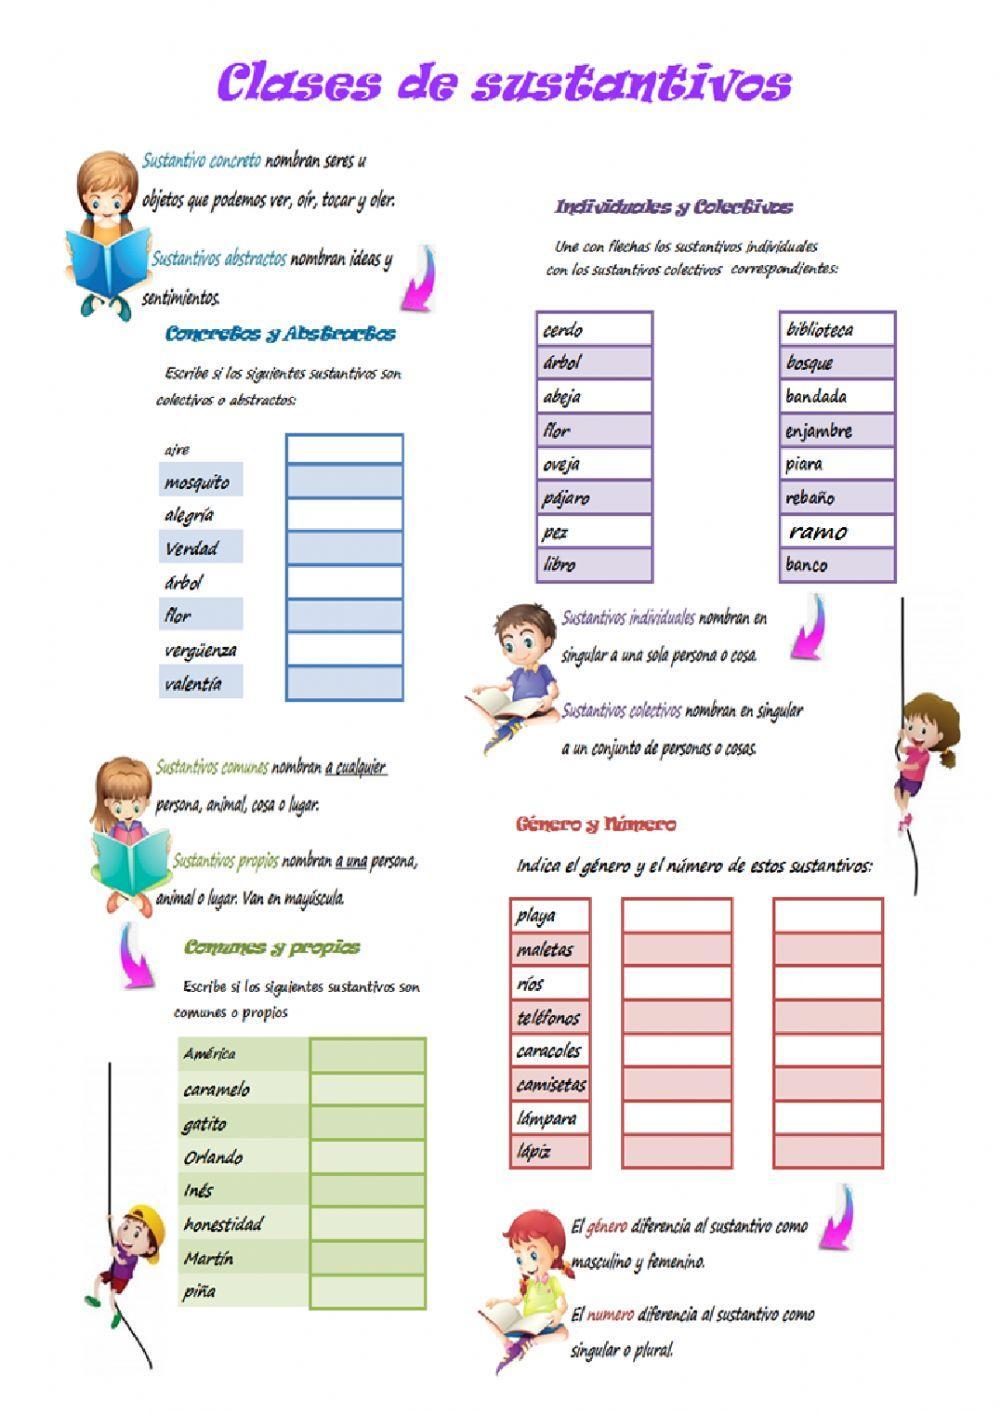 Clases de Sustantivos online pdf exercise | Live Worksheets